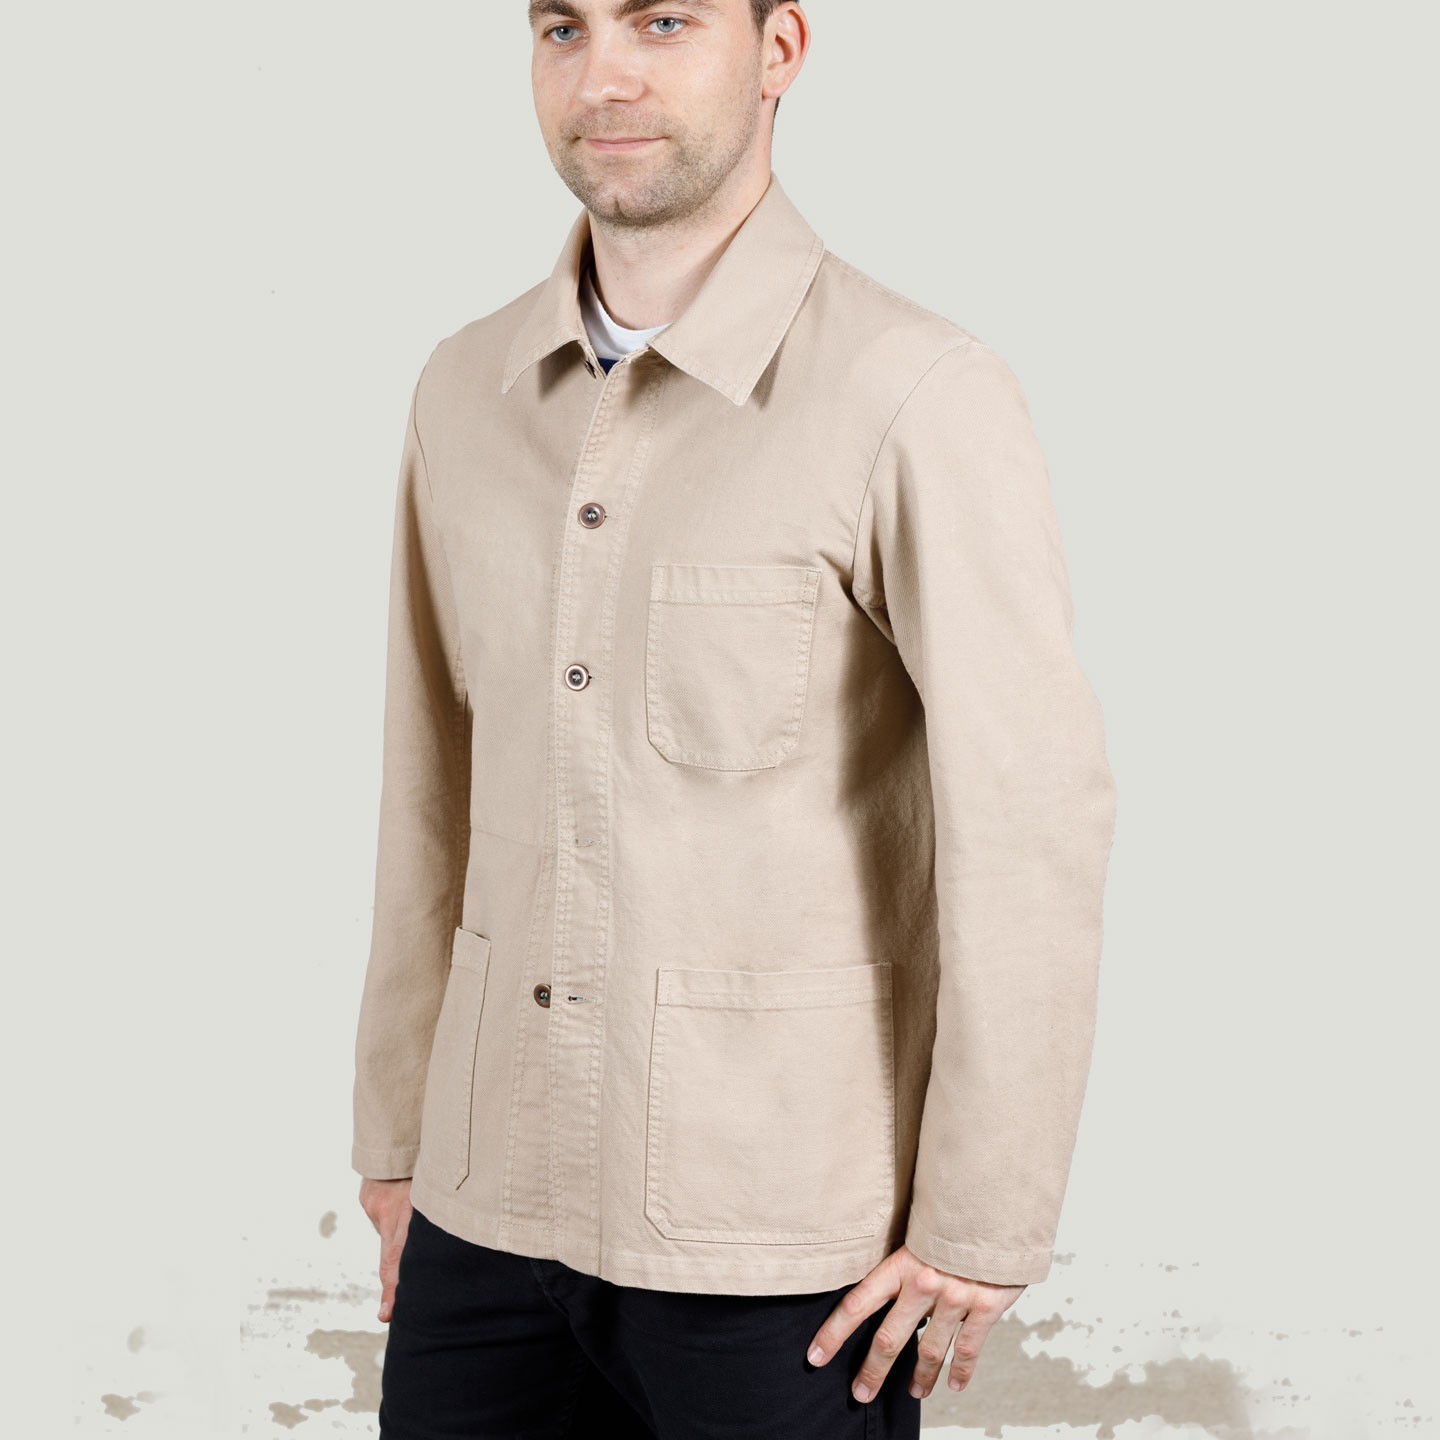 VETRA Workwear Jacket in organic cotton twill fabric 1C/5C chalk